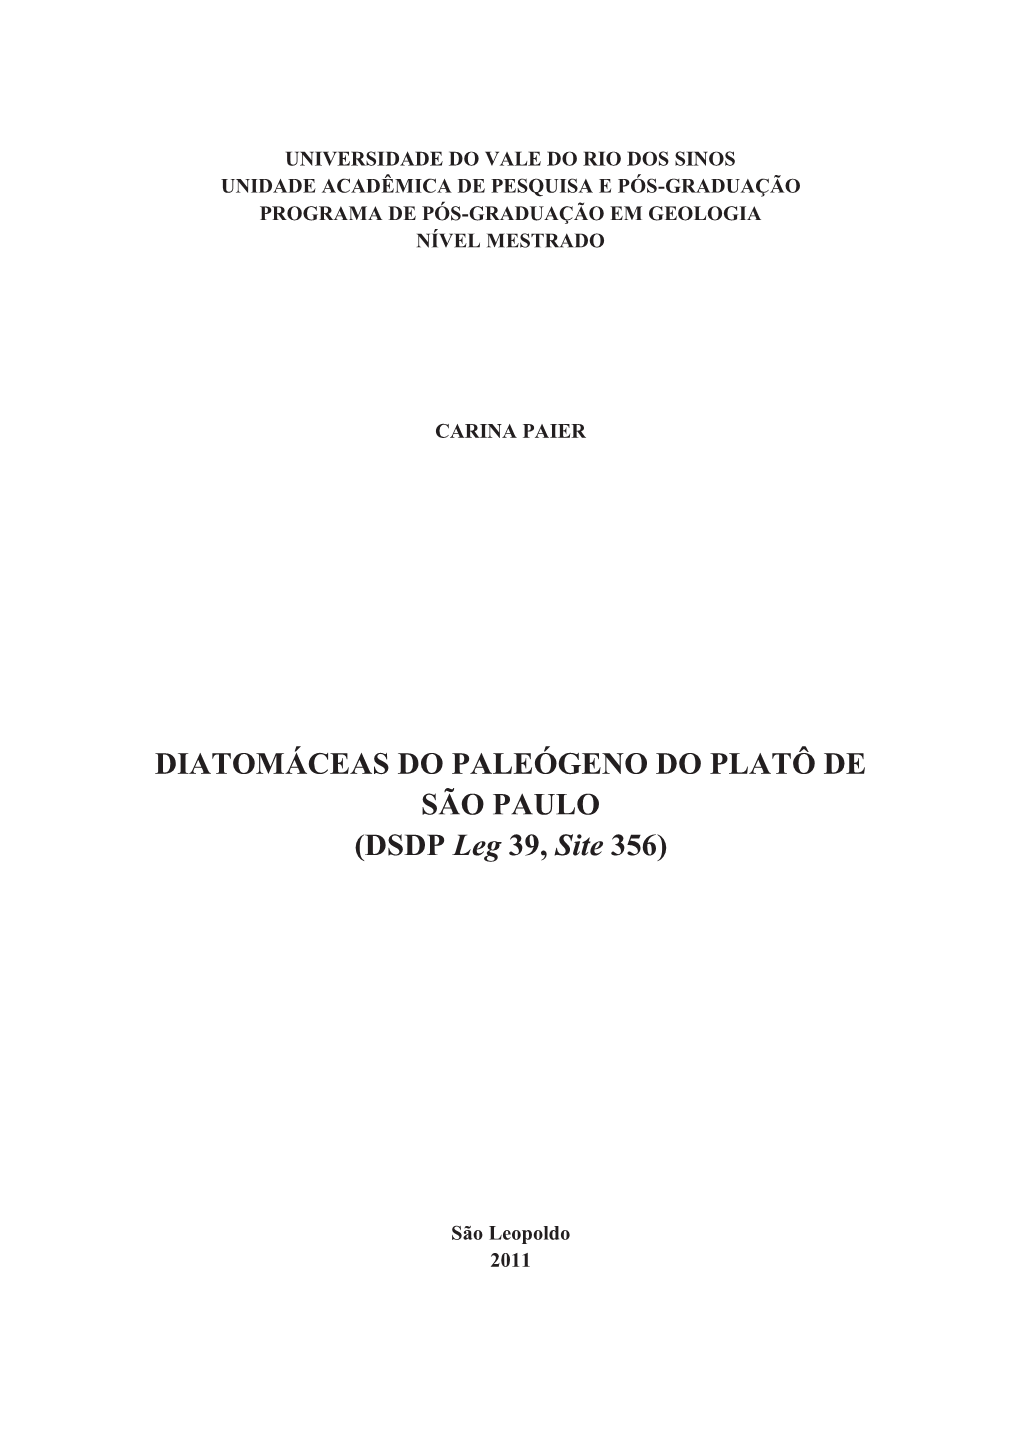 DIATOMÁCEAS DO PALEÓGENO DO PLATÔ DE SÃO PAULO (DSDP Leg 39, Site 356)